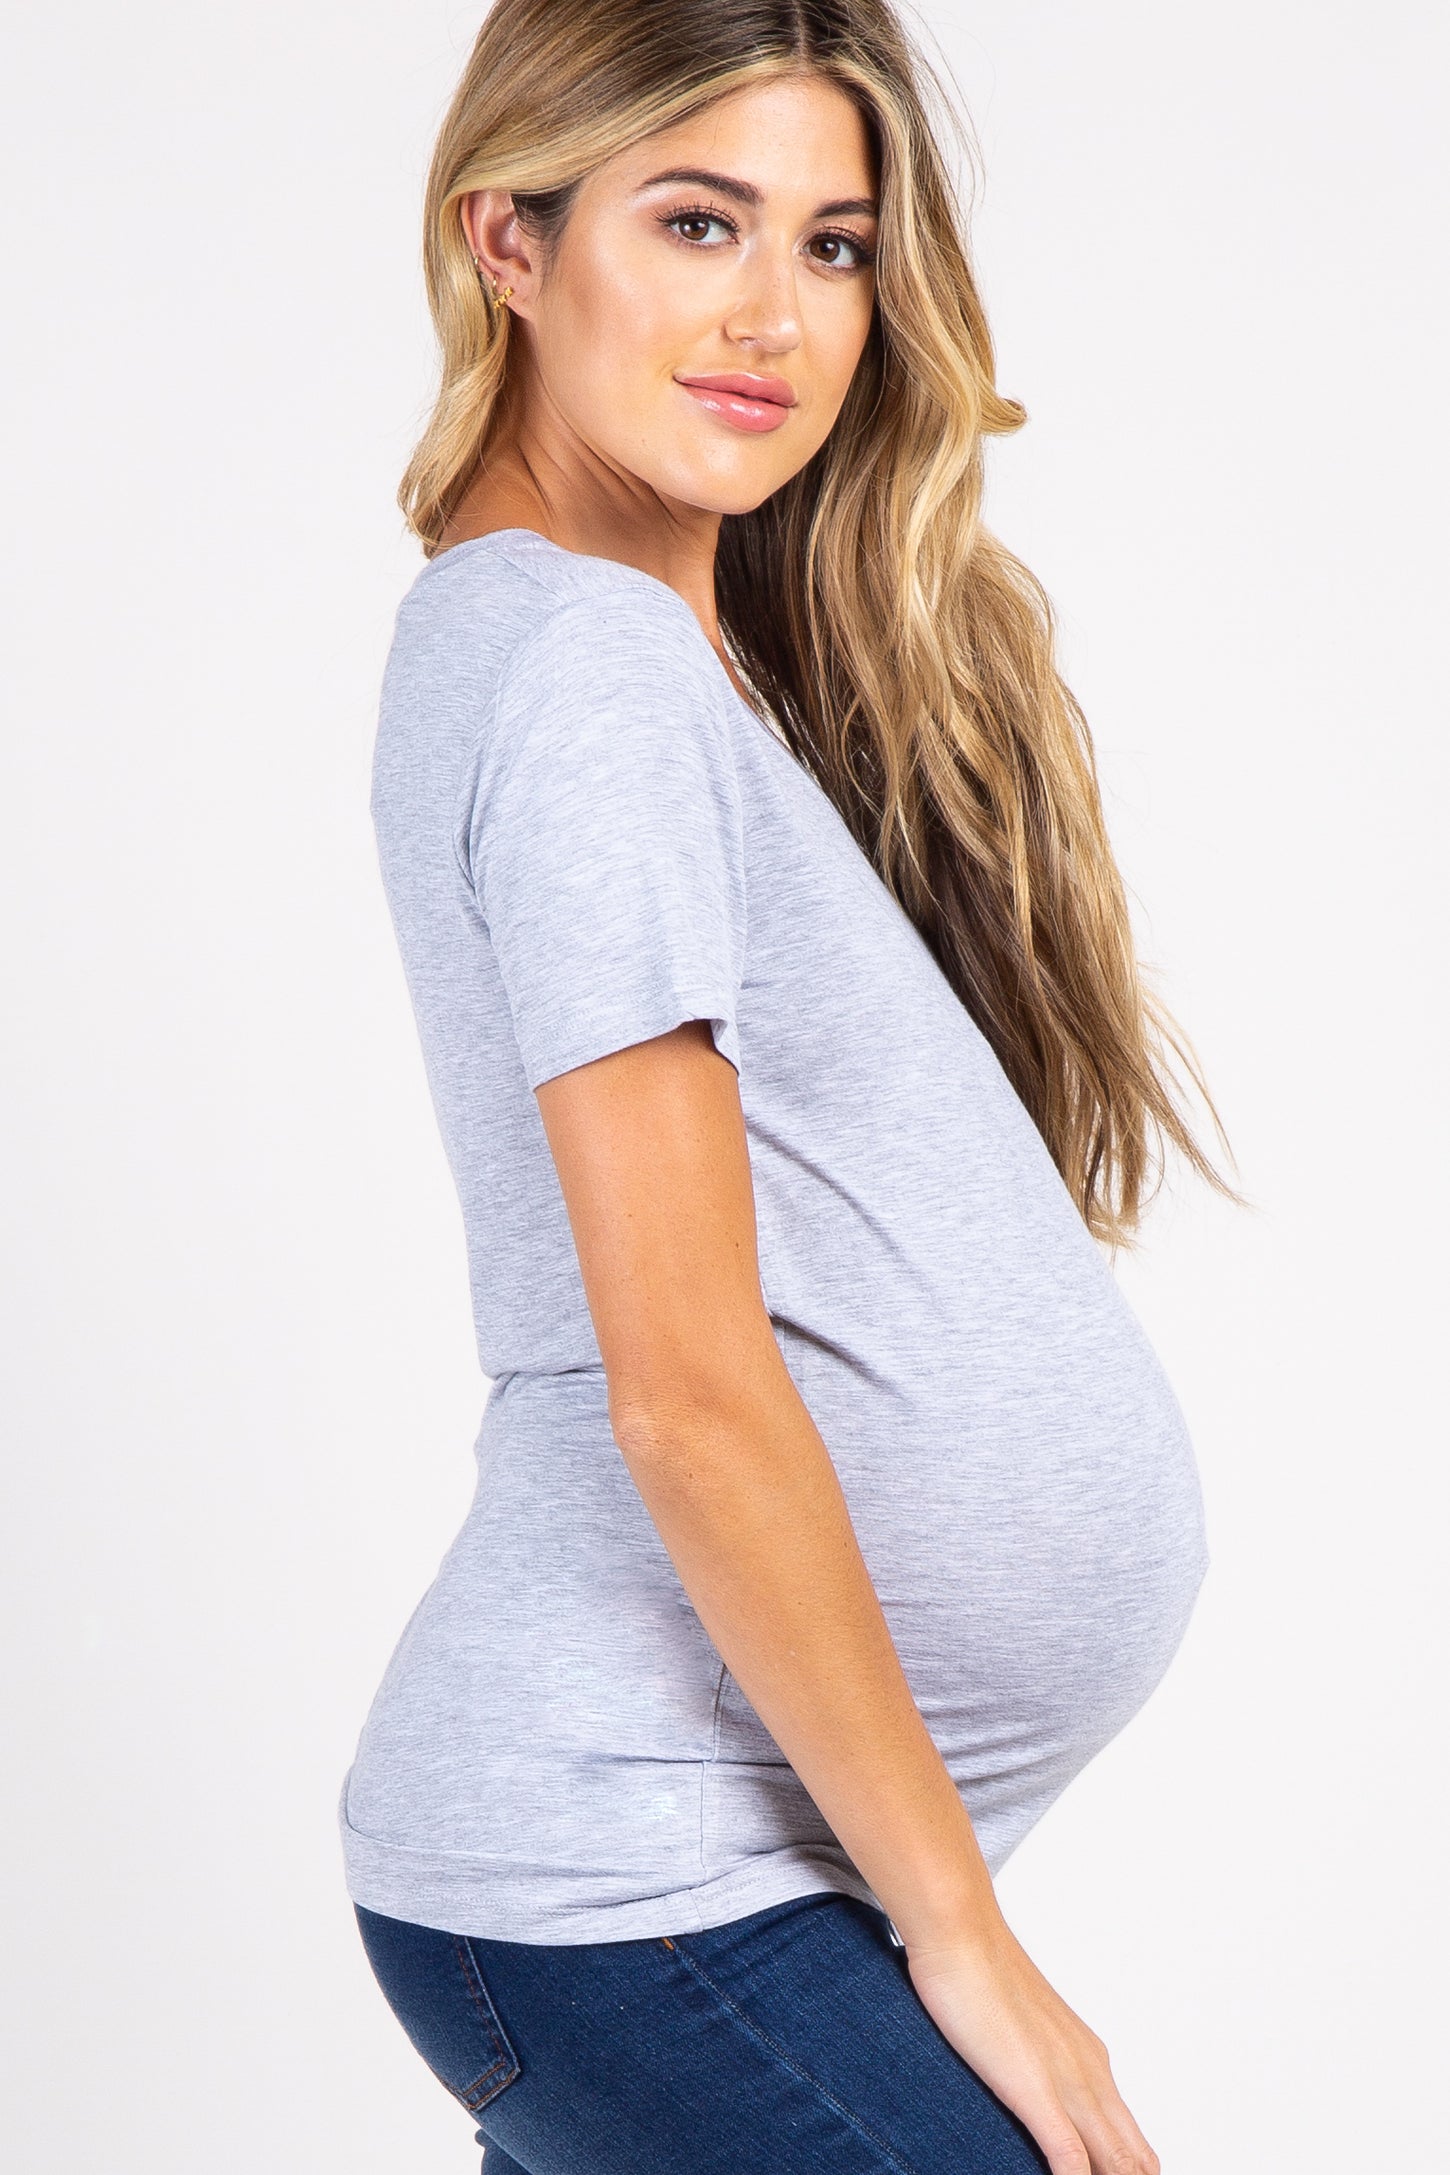 Heather Grey Basic V-Neck Maternity Top